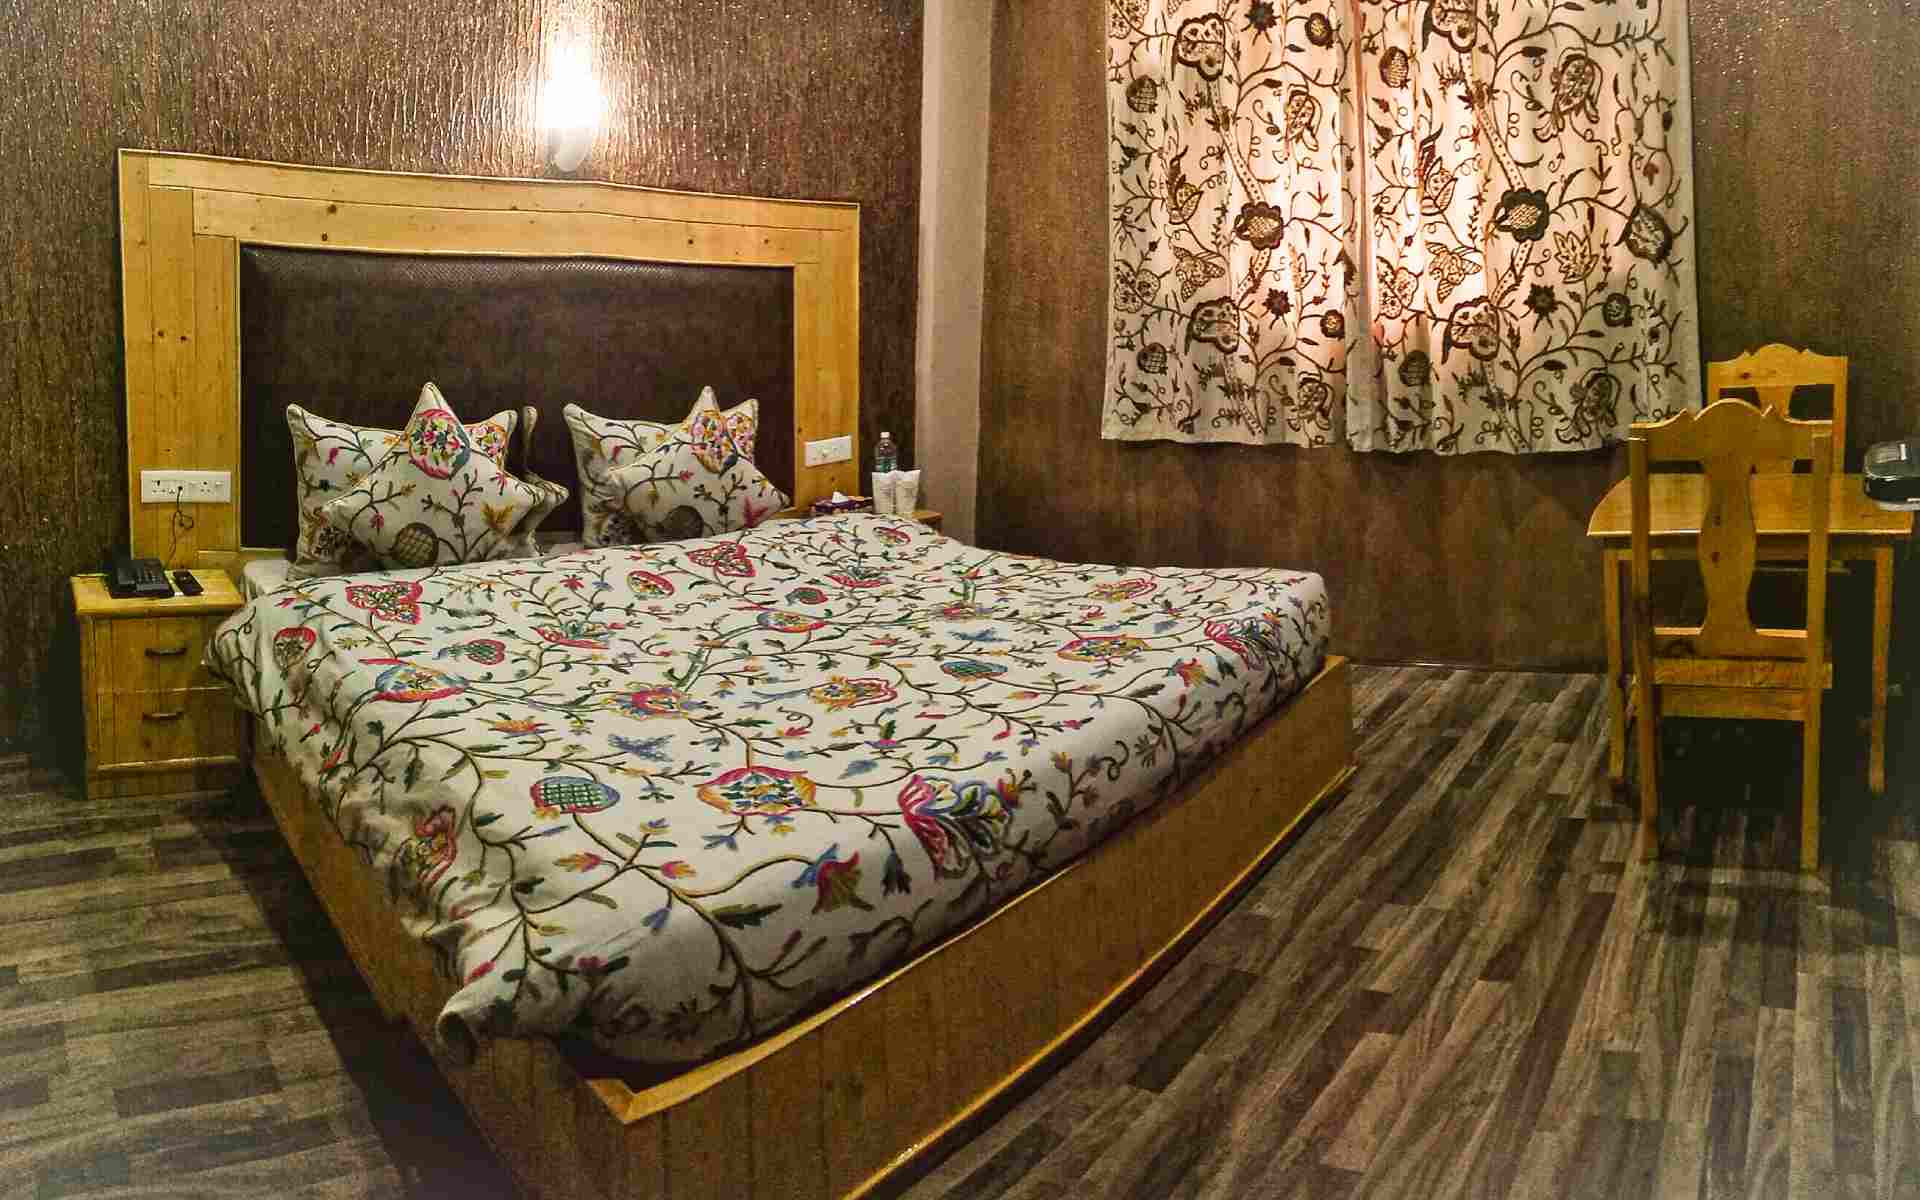 Best hotels in srinagar